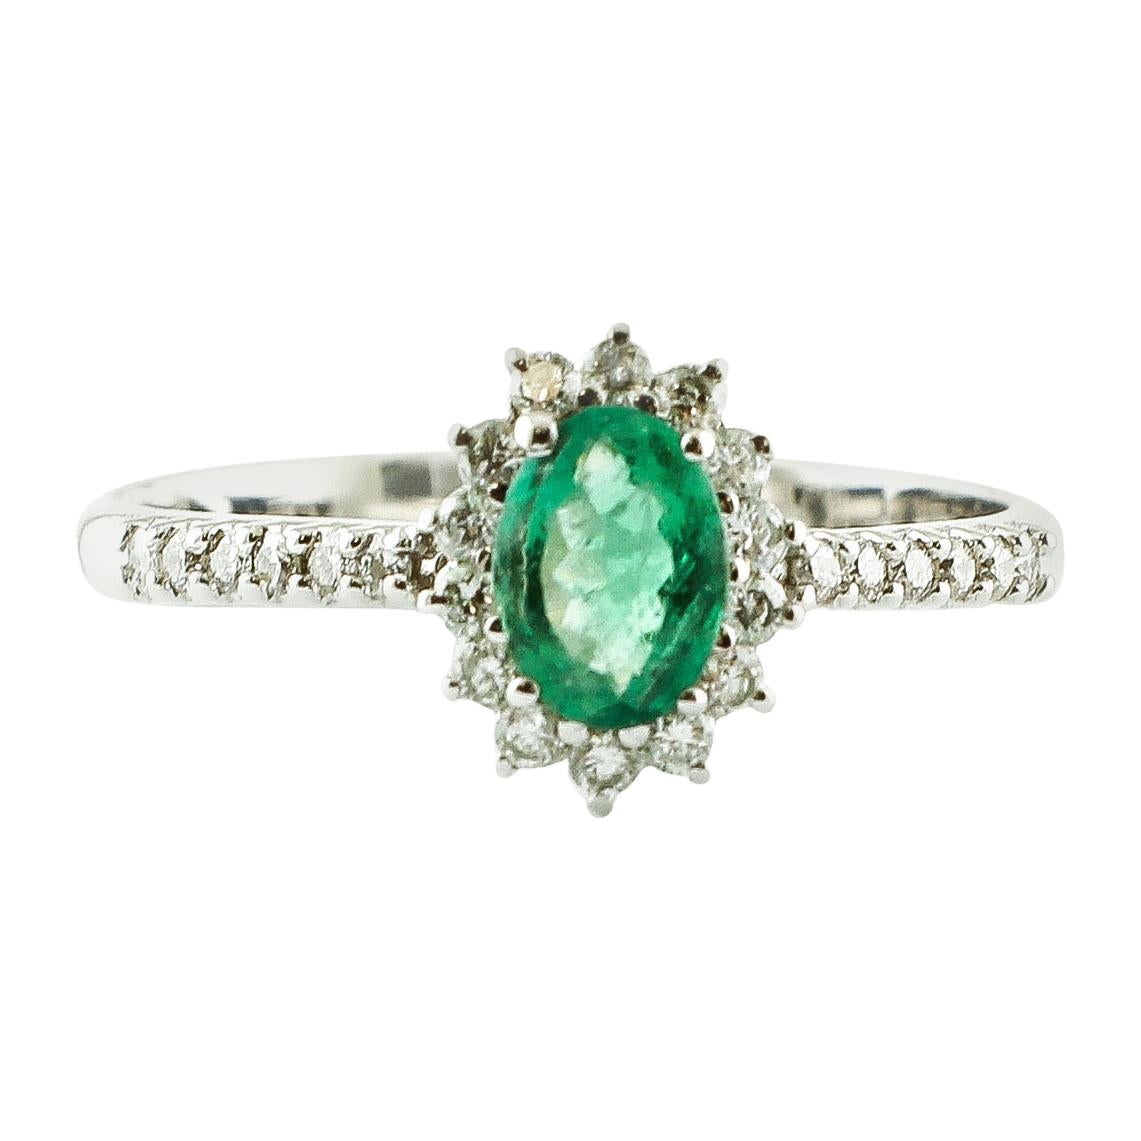 Central Emerald, Diamonds, 18 Karat White Gold Ring